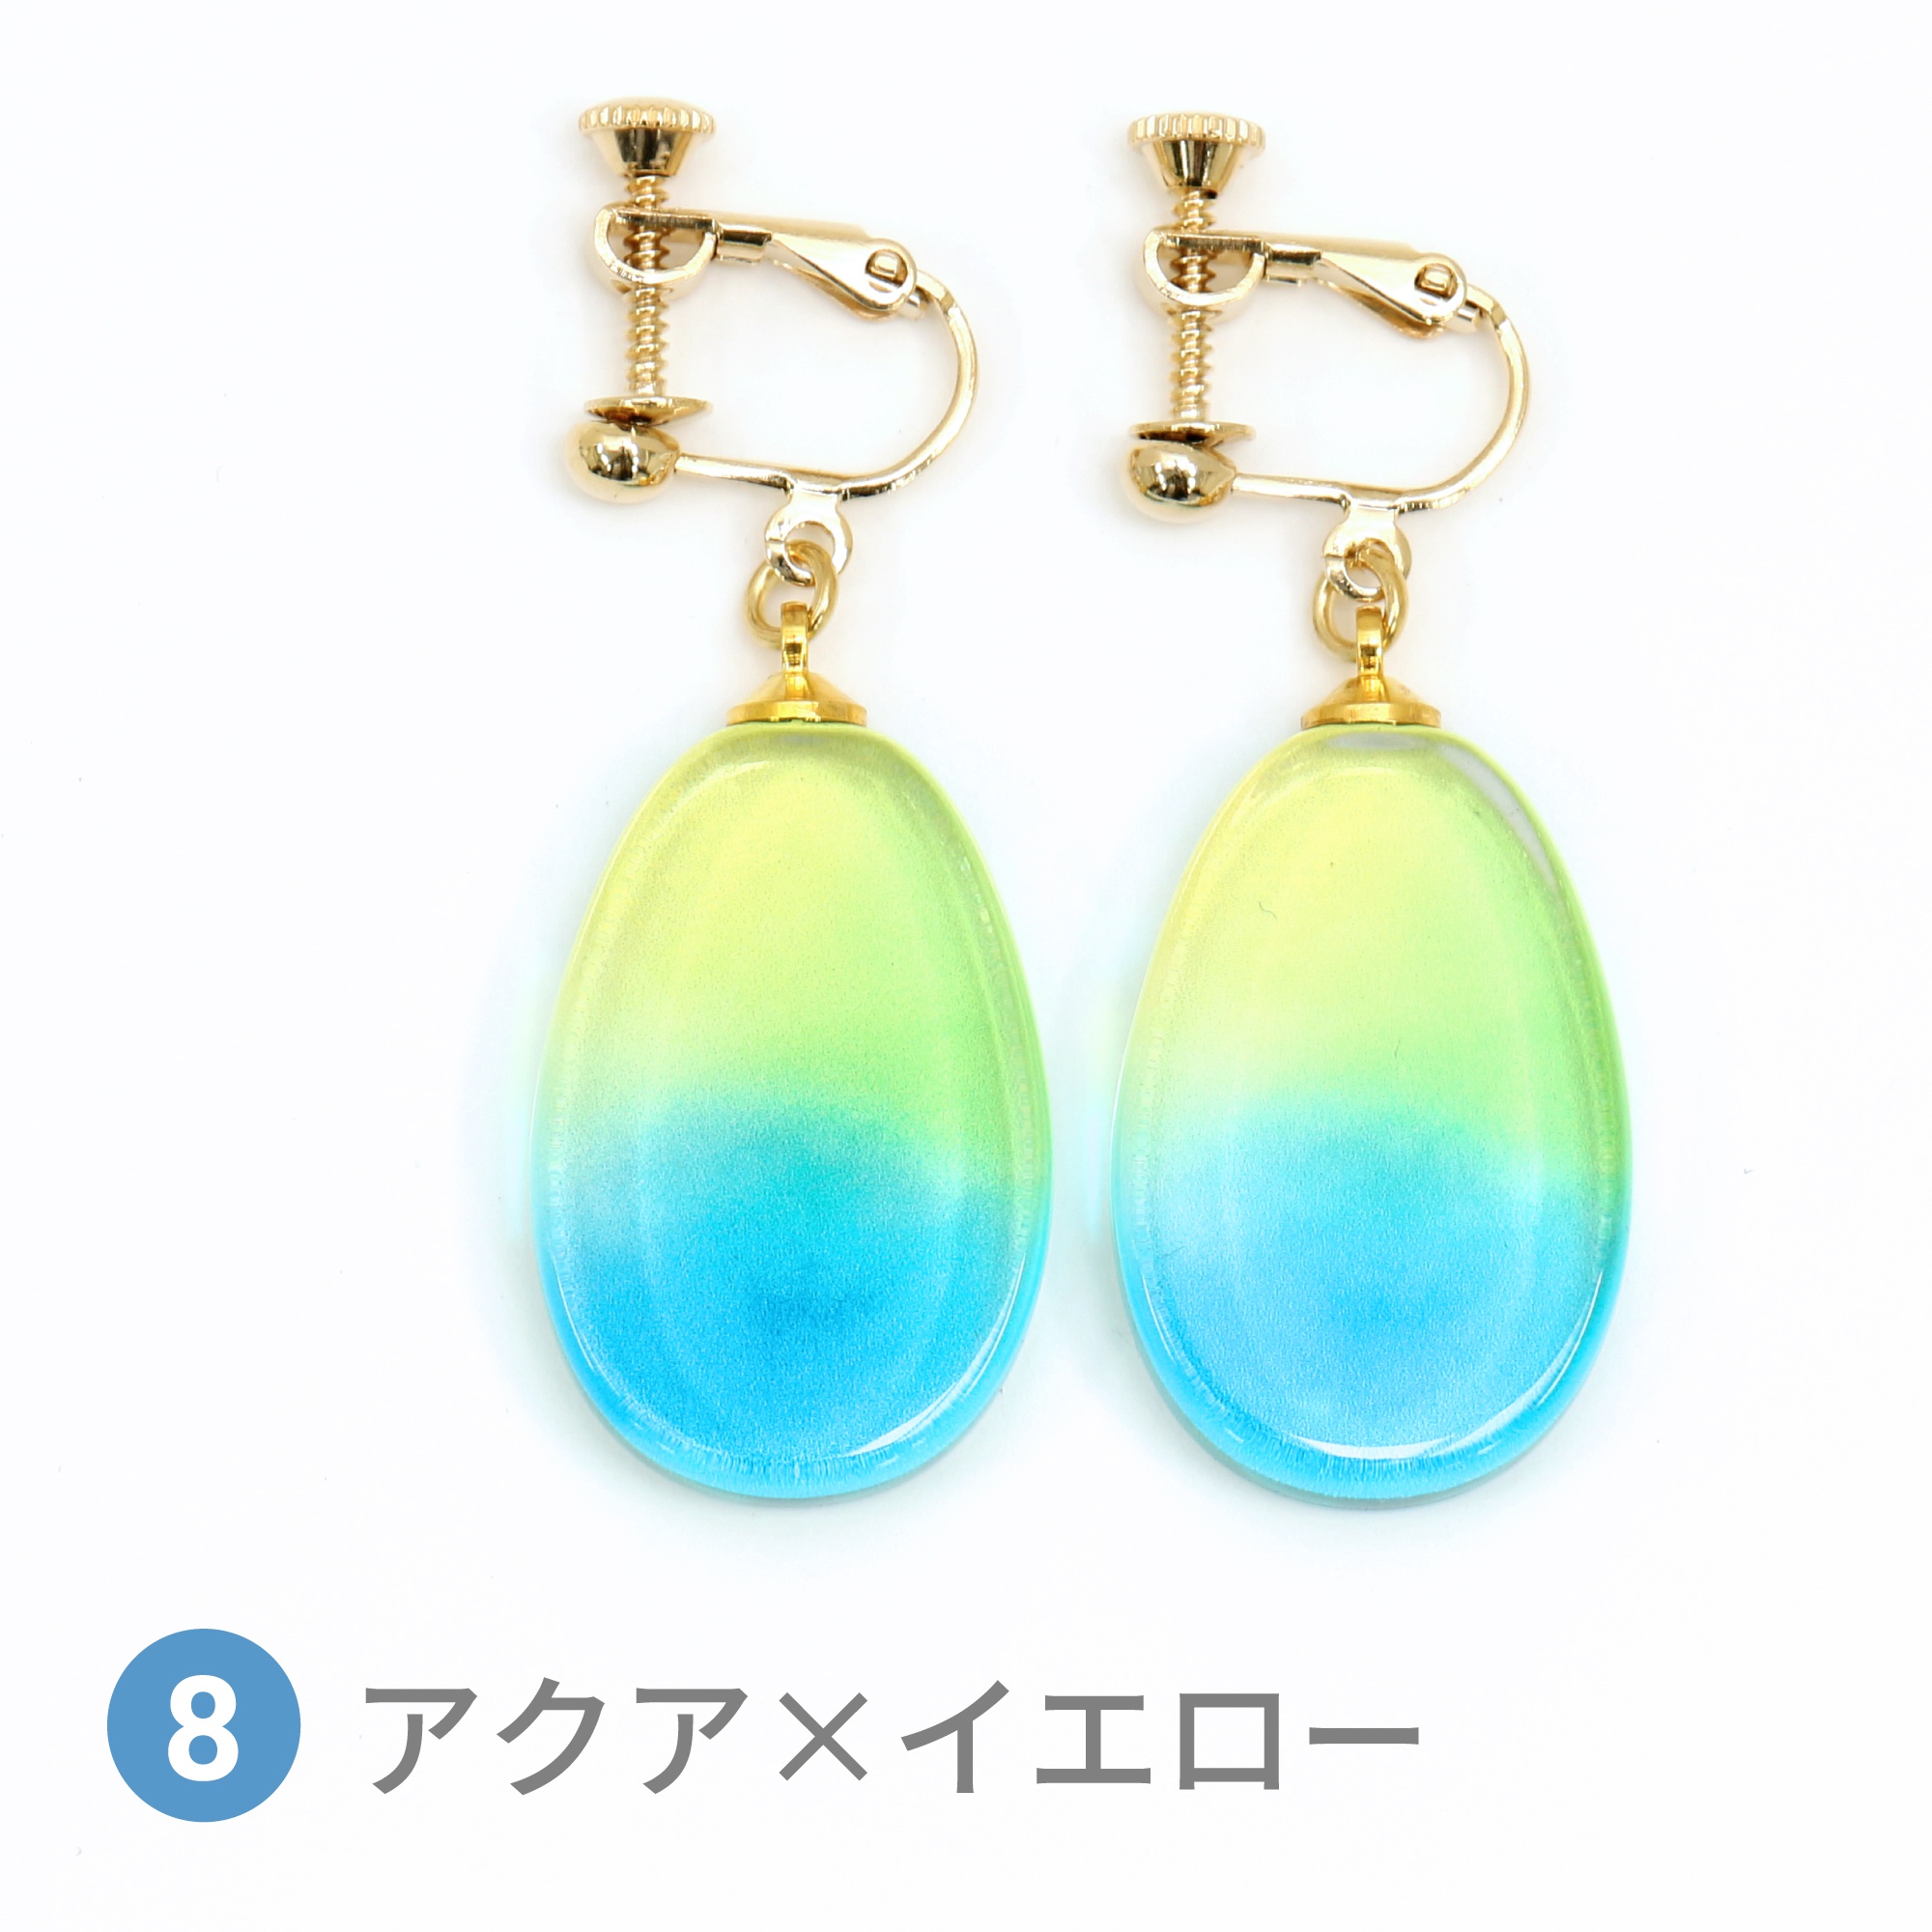 Glass accessories Earring AURORA aqua&yellow drop shape